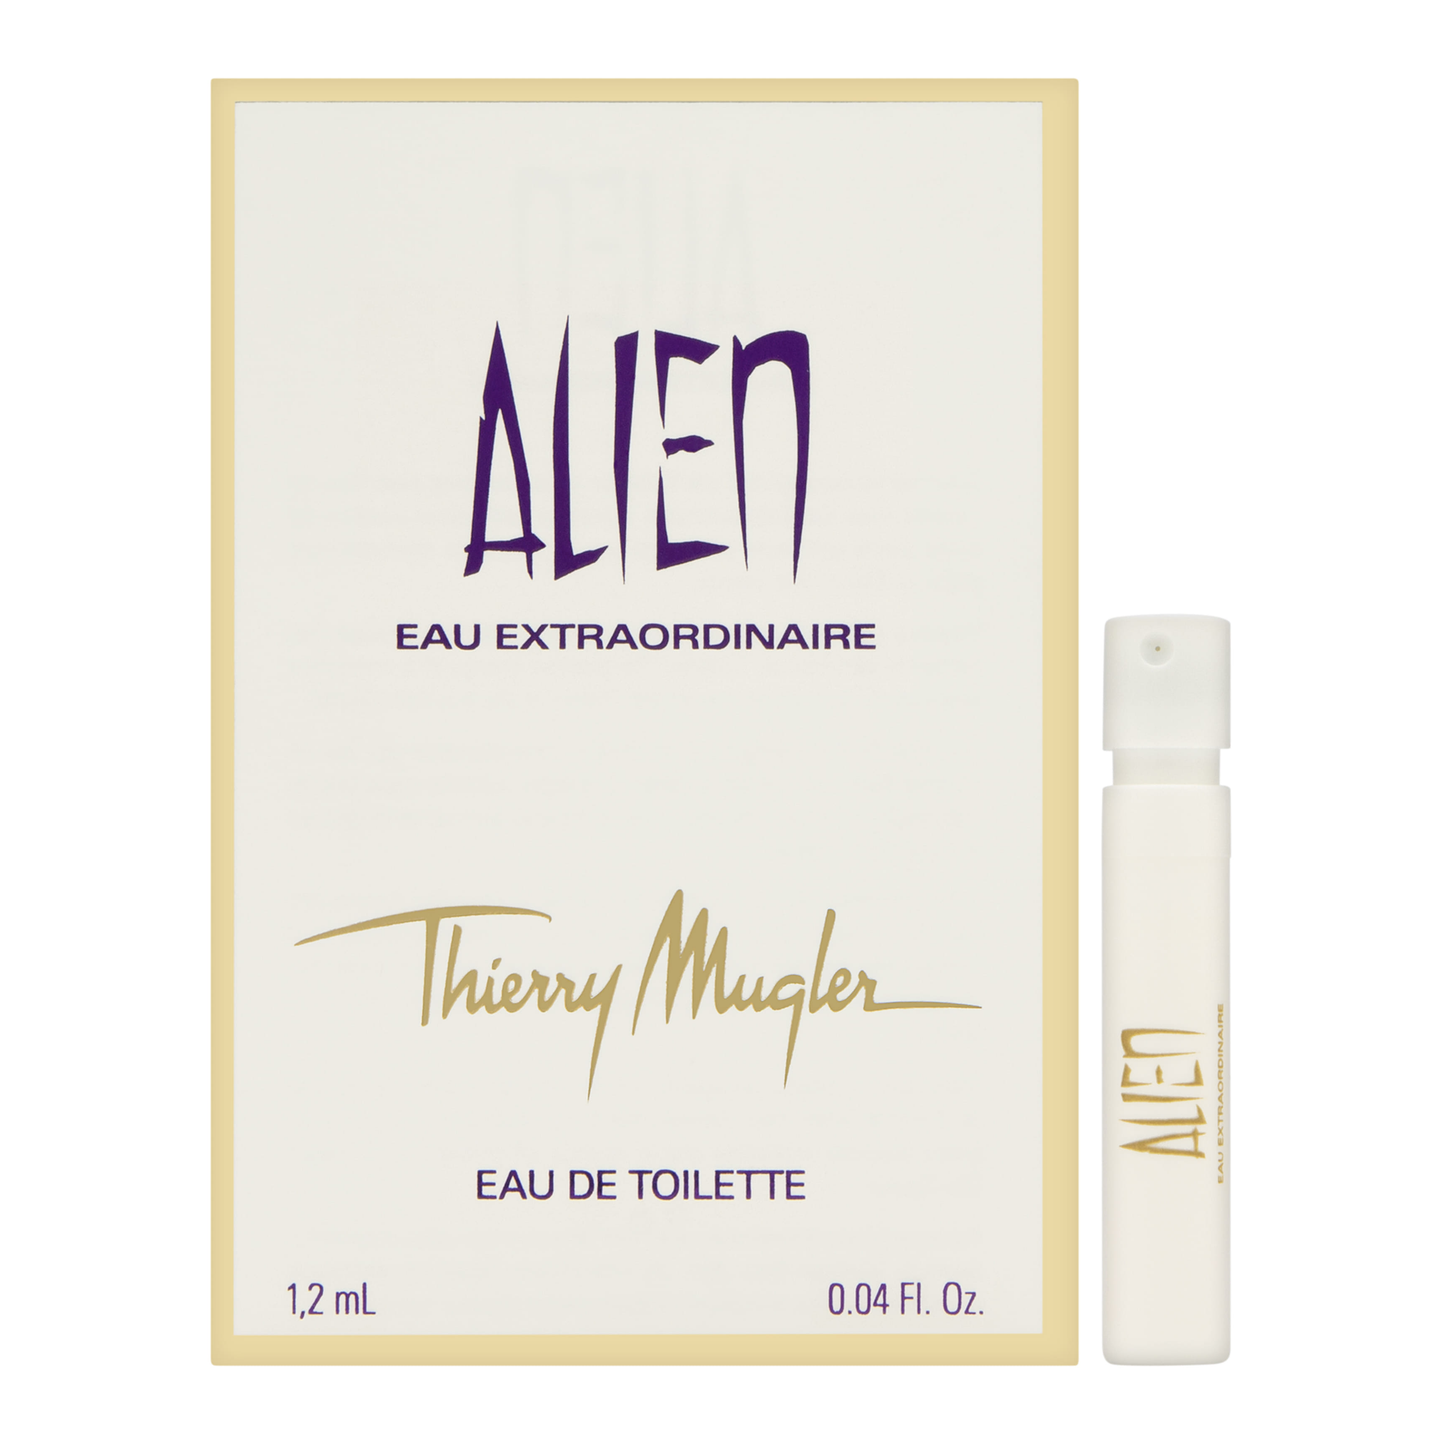 THIERRY MUGLER Alien Eau Extraordinaire EDT 1.2ml Vial Travel Fragrance for women